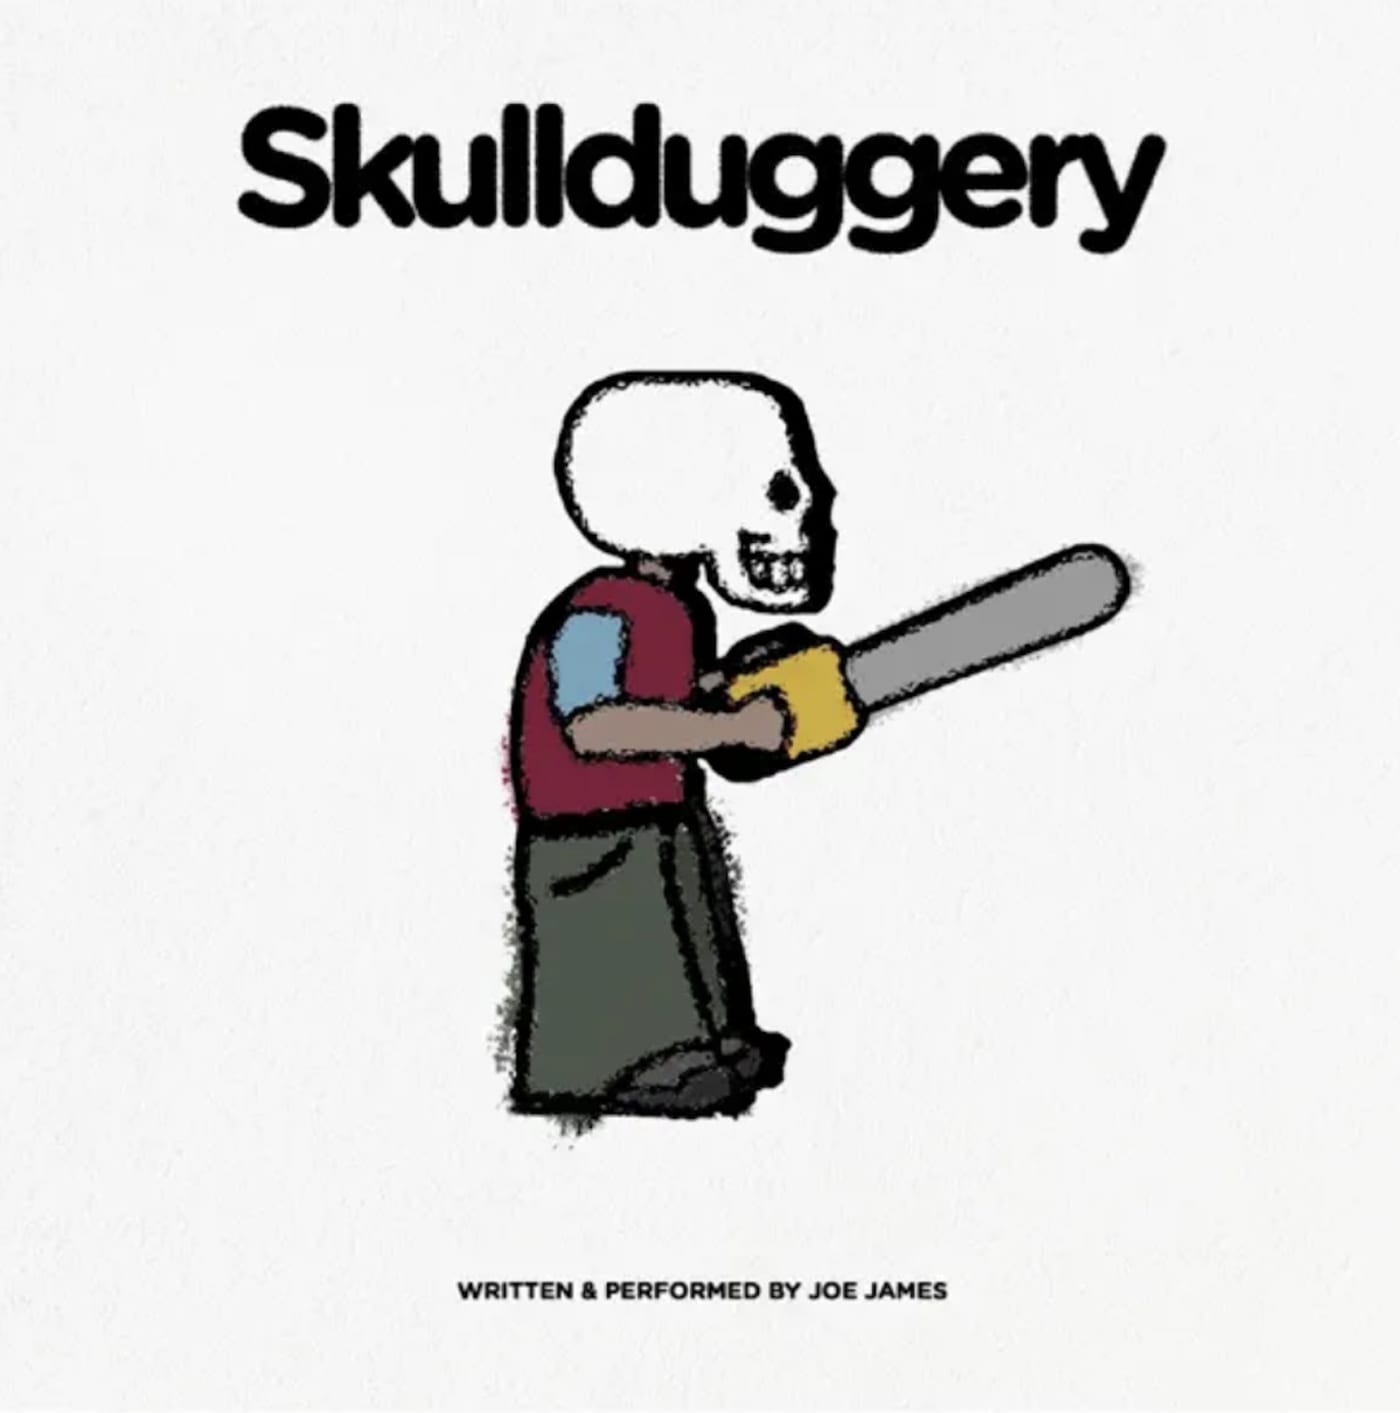 Joe James 'Skullduggery' (artwork)